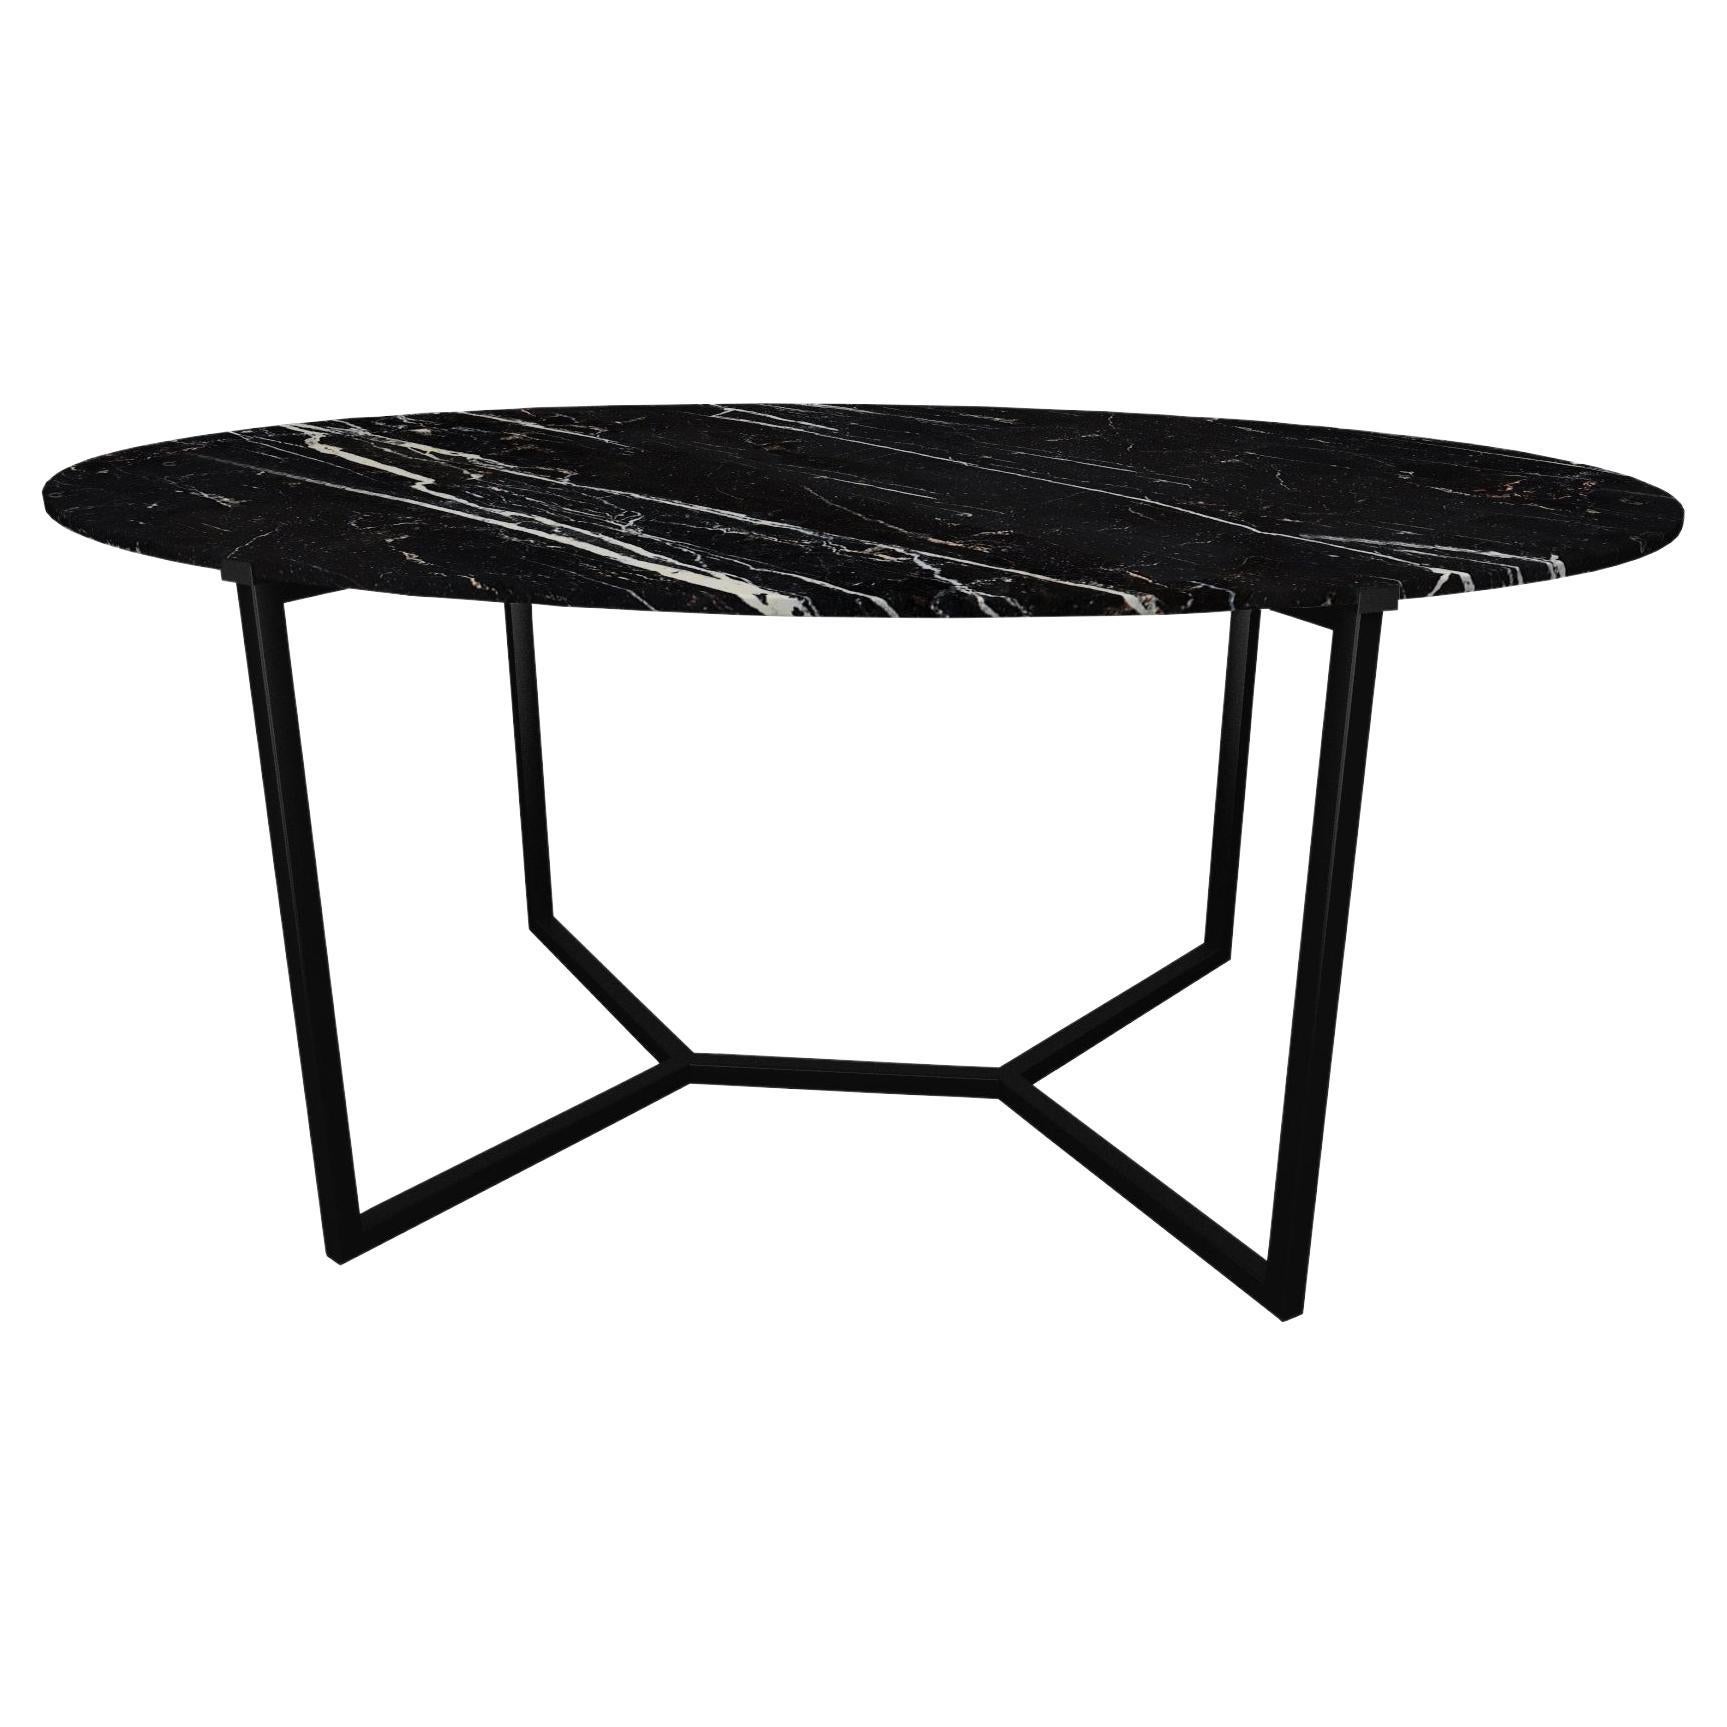 NORDST TEDDY Table de salle à manger, marbre italien Black Eagle, Danish Modern Design, New